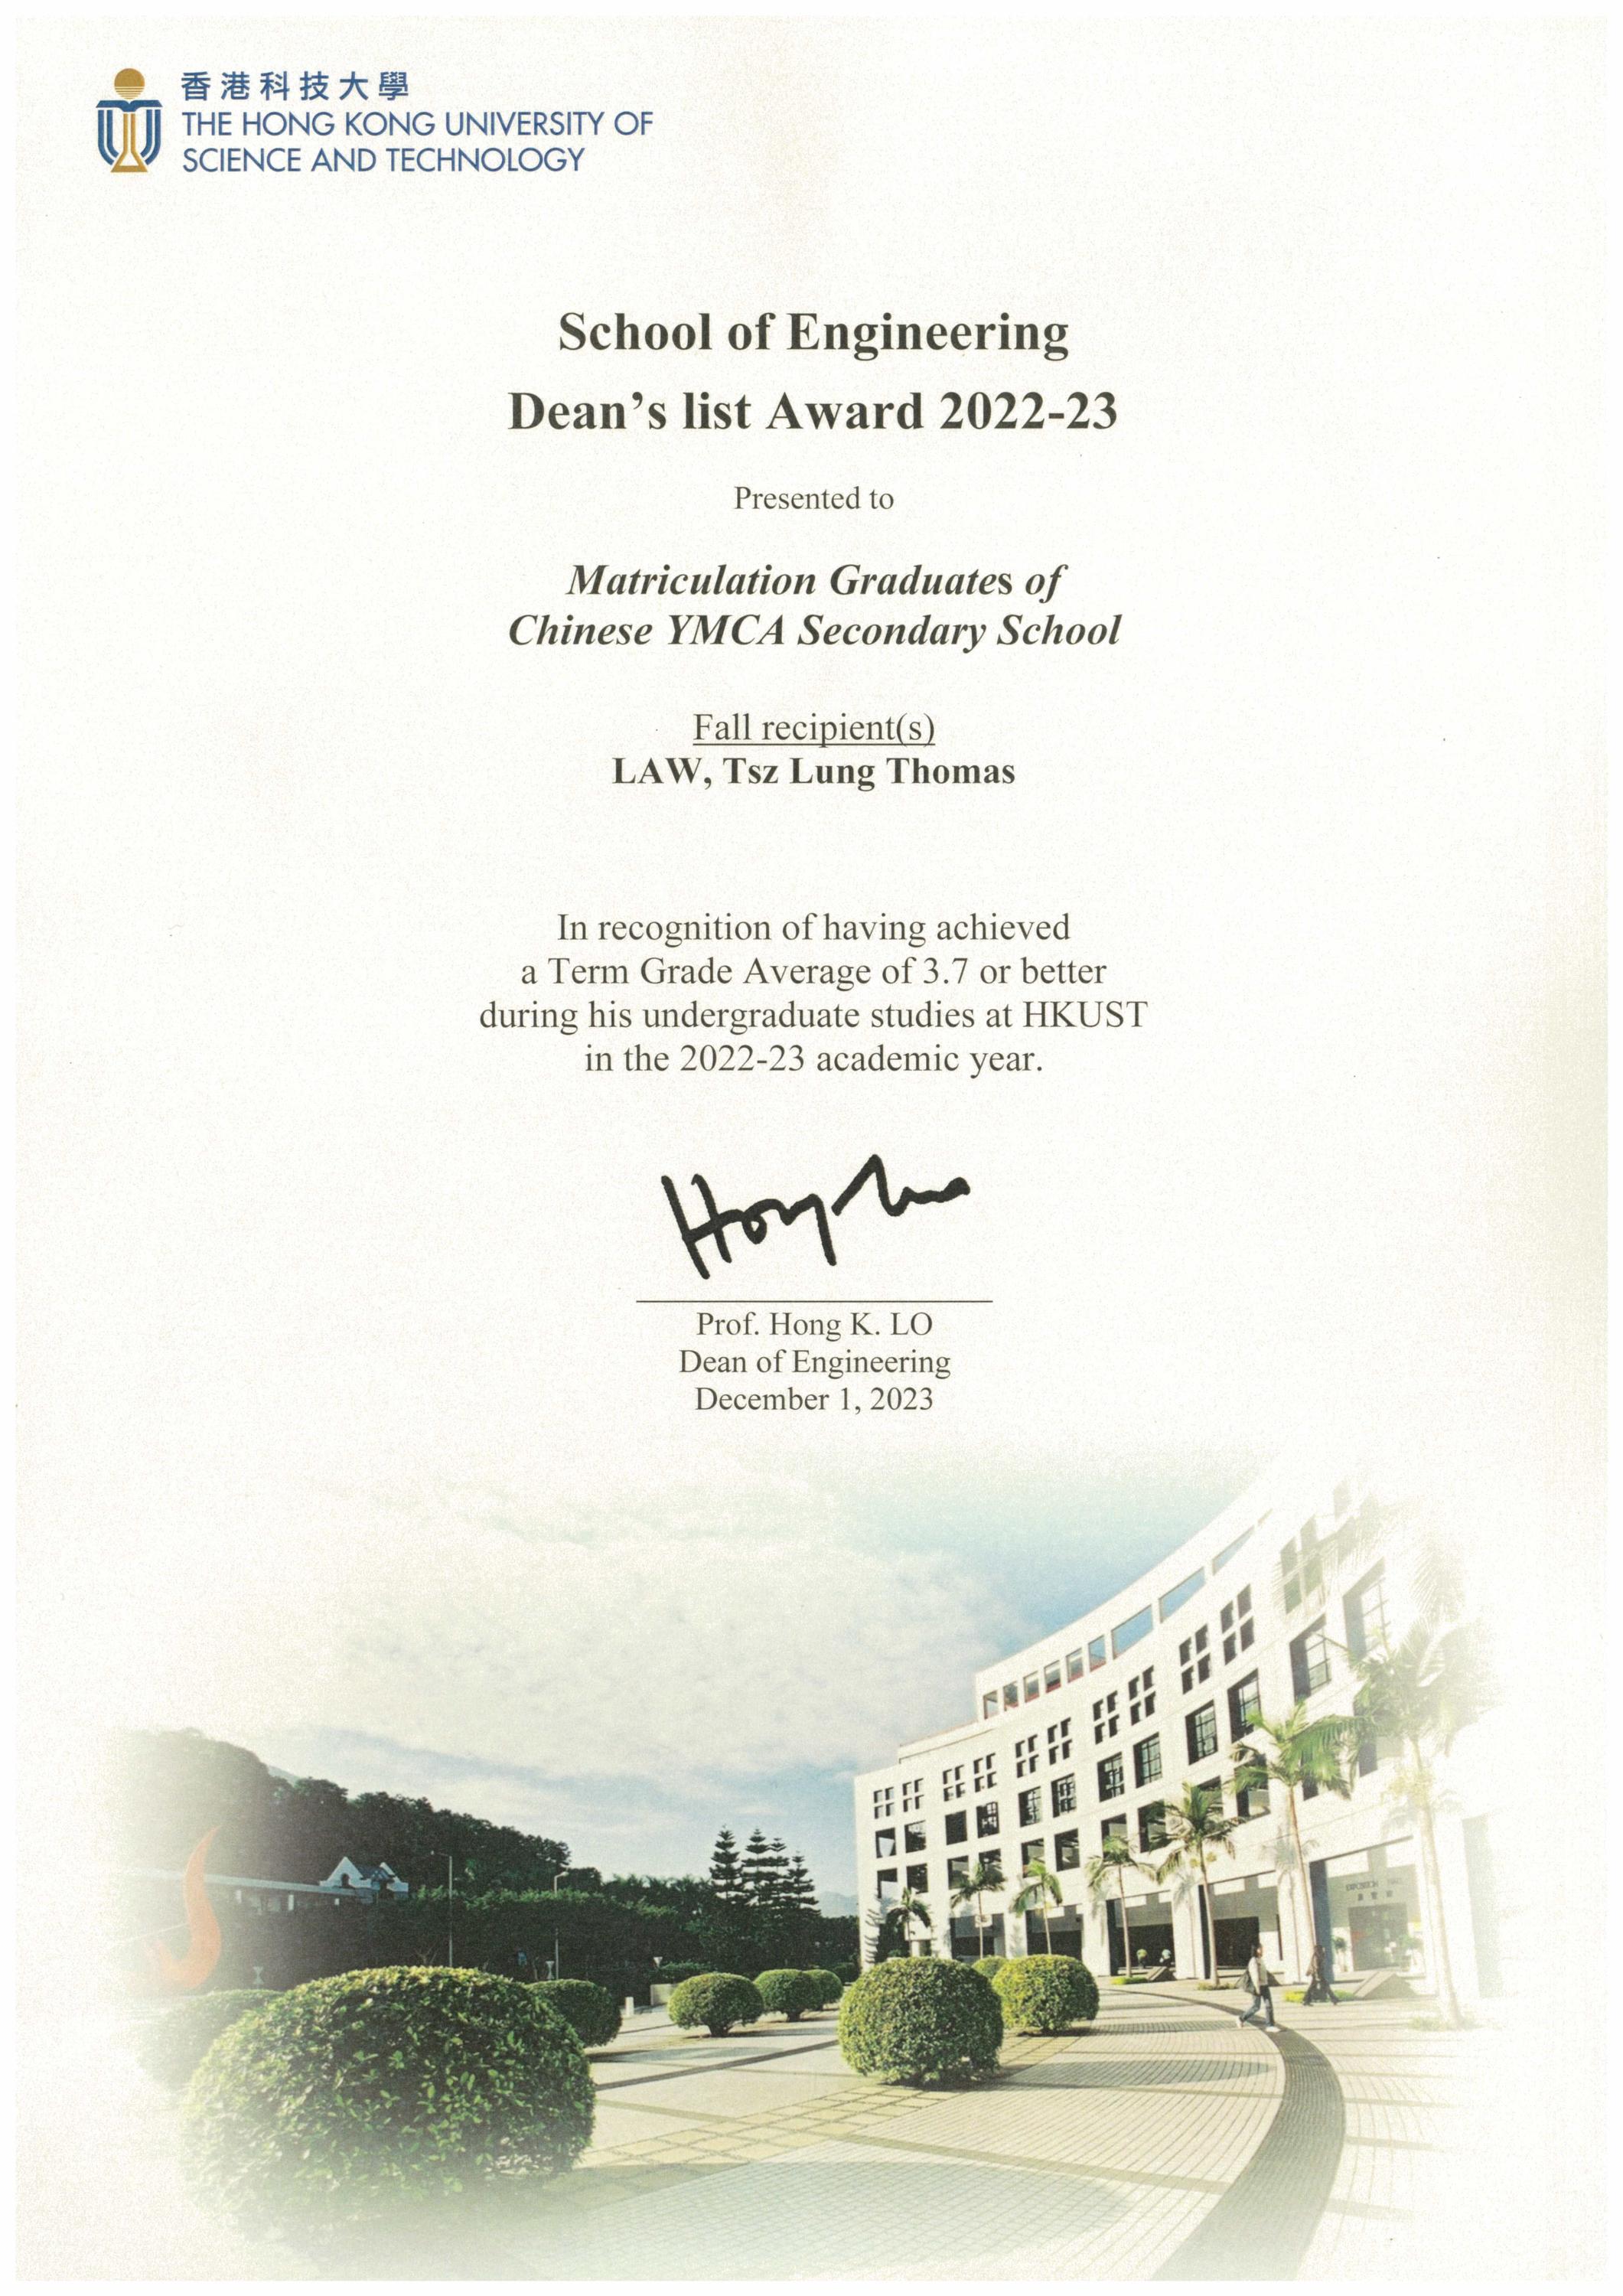 Dean’s list Award presented by HKUST